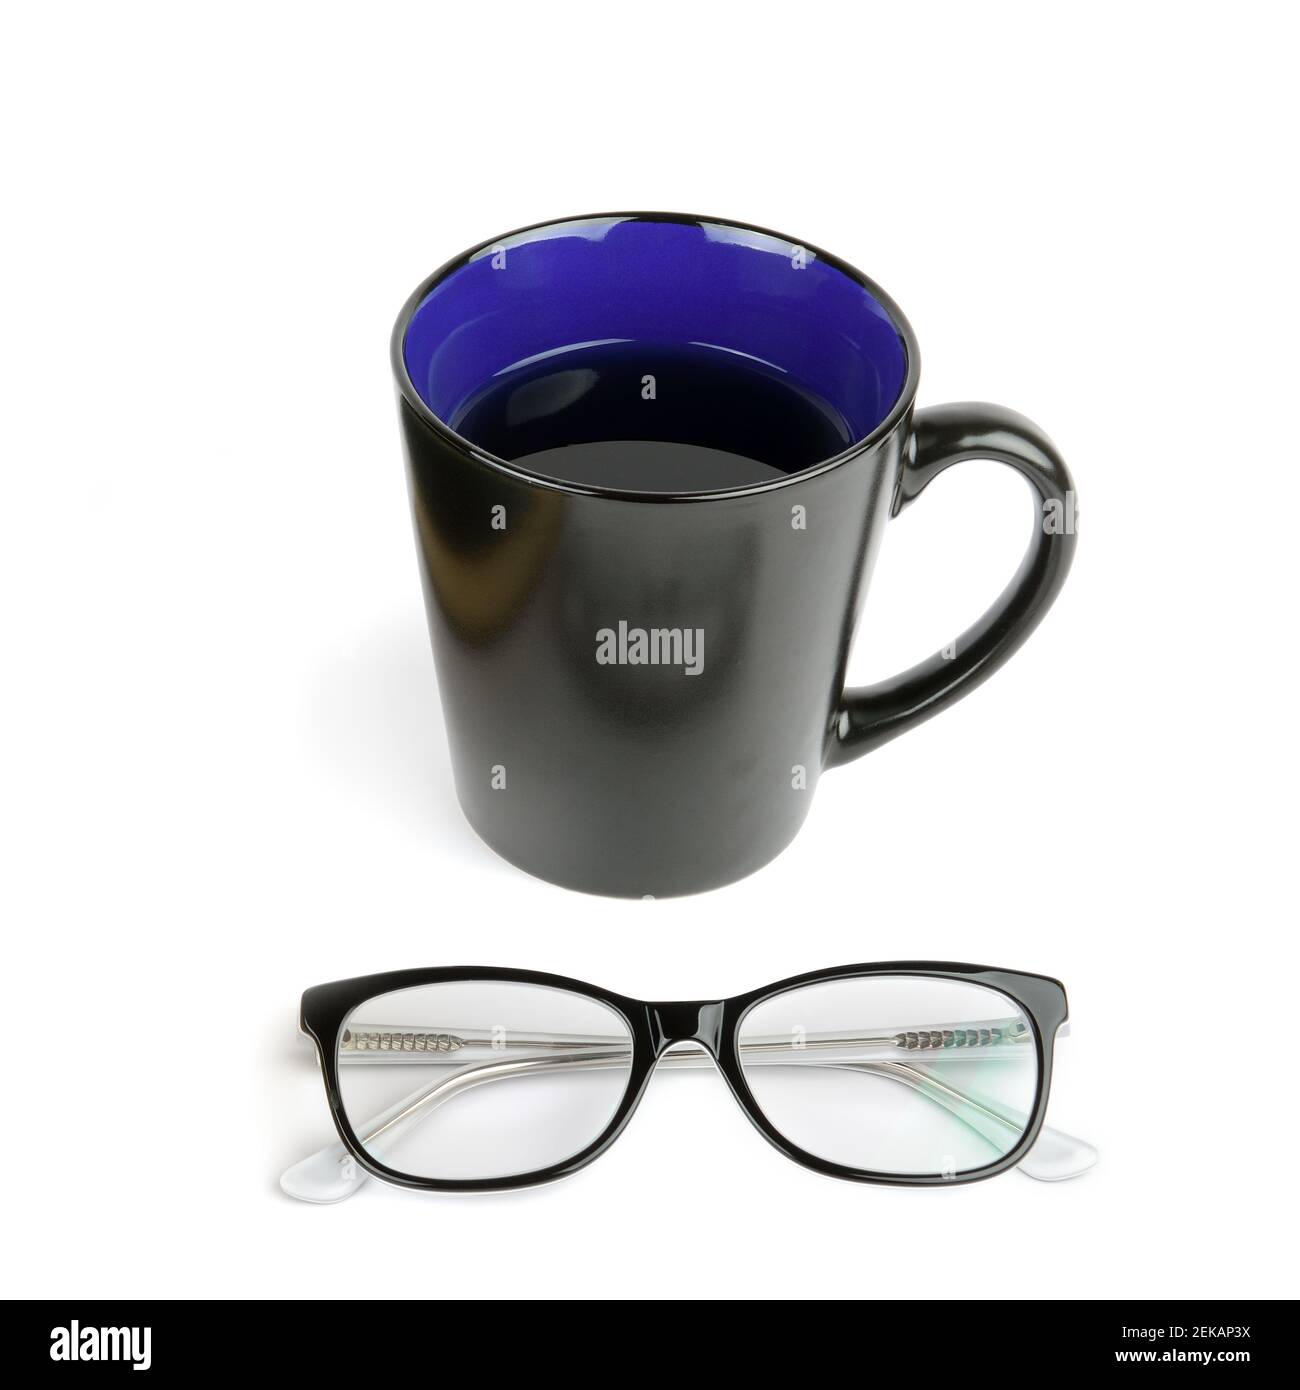 https://c8.alamy.com/comp/2EKAP3X/black-cup-with-coffee-and-glasses-isolated-on-white-background-2EKAP3X.jpg